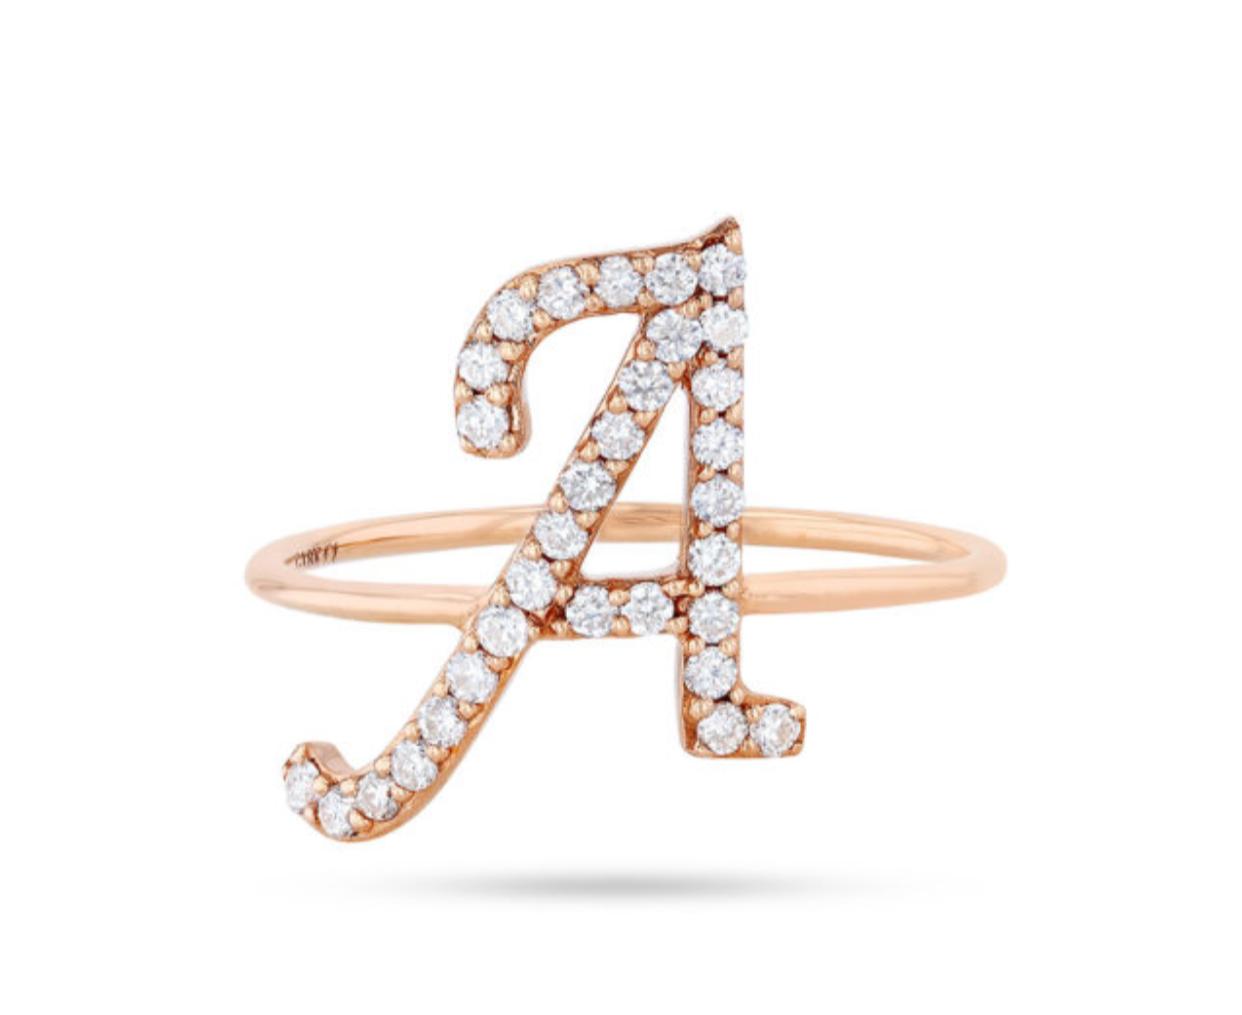 Panacheous jewelry- white gold & Diamond A ring